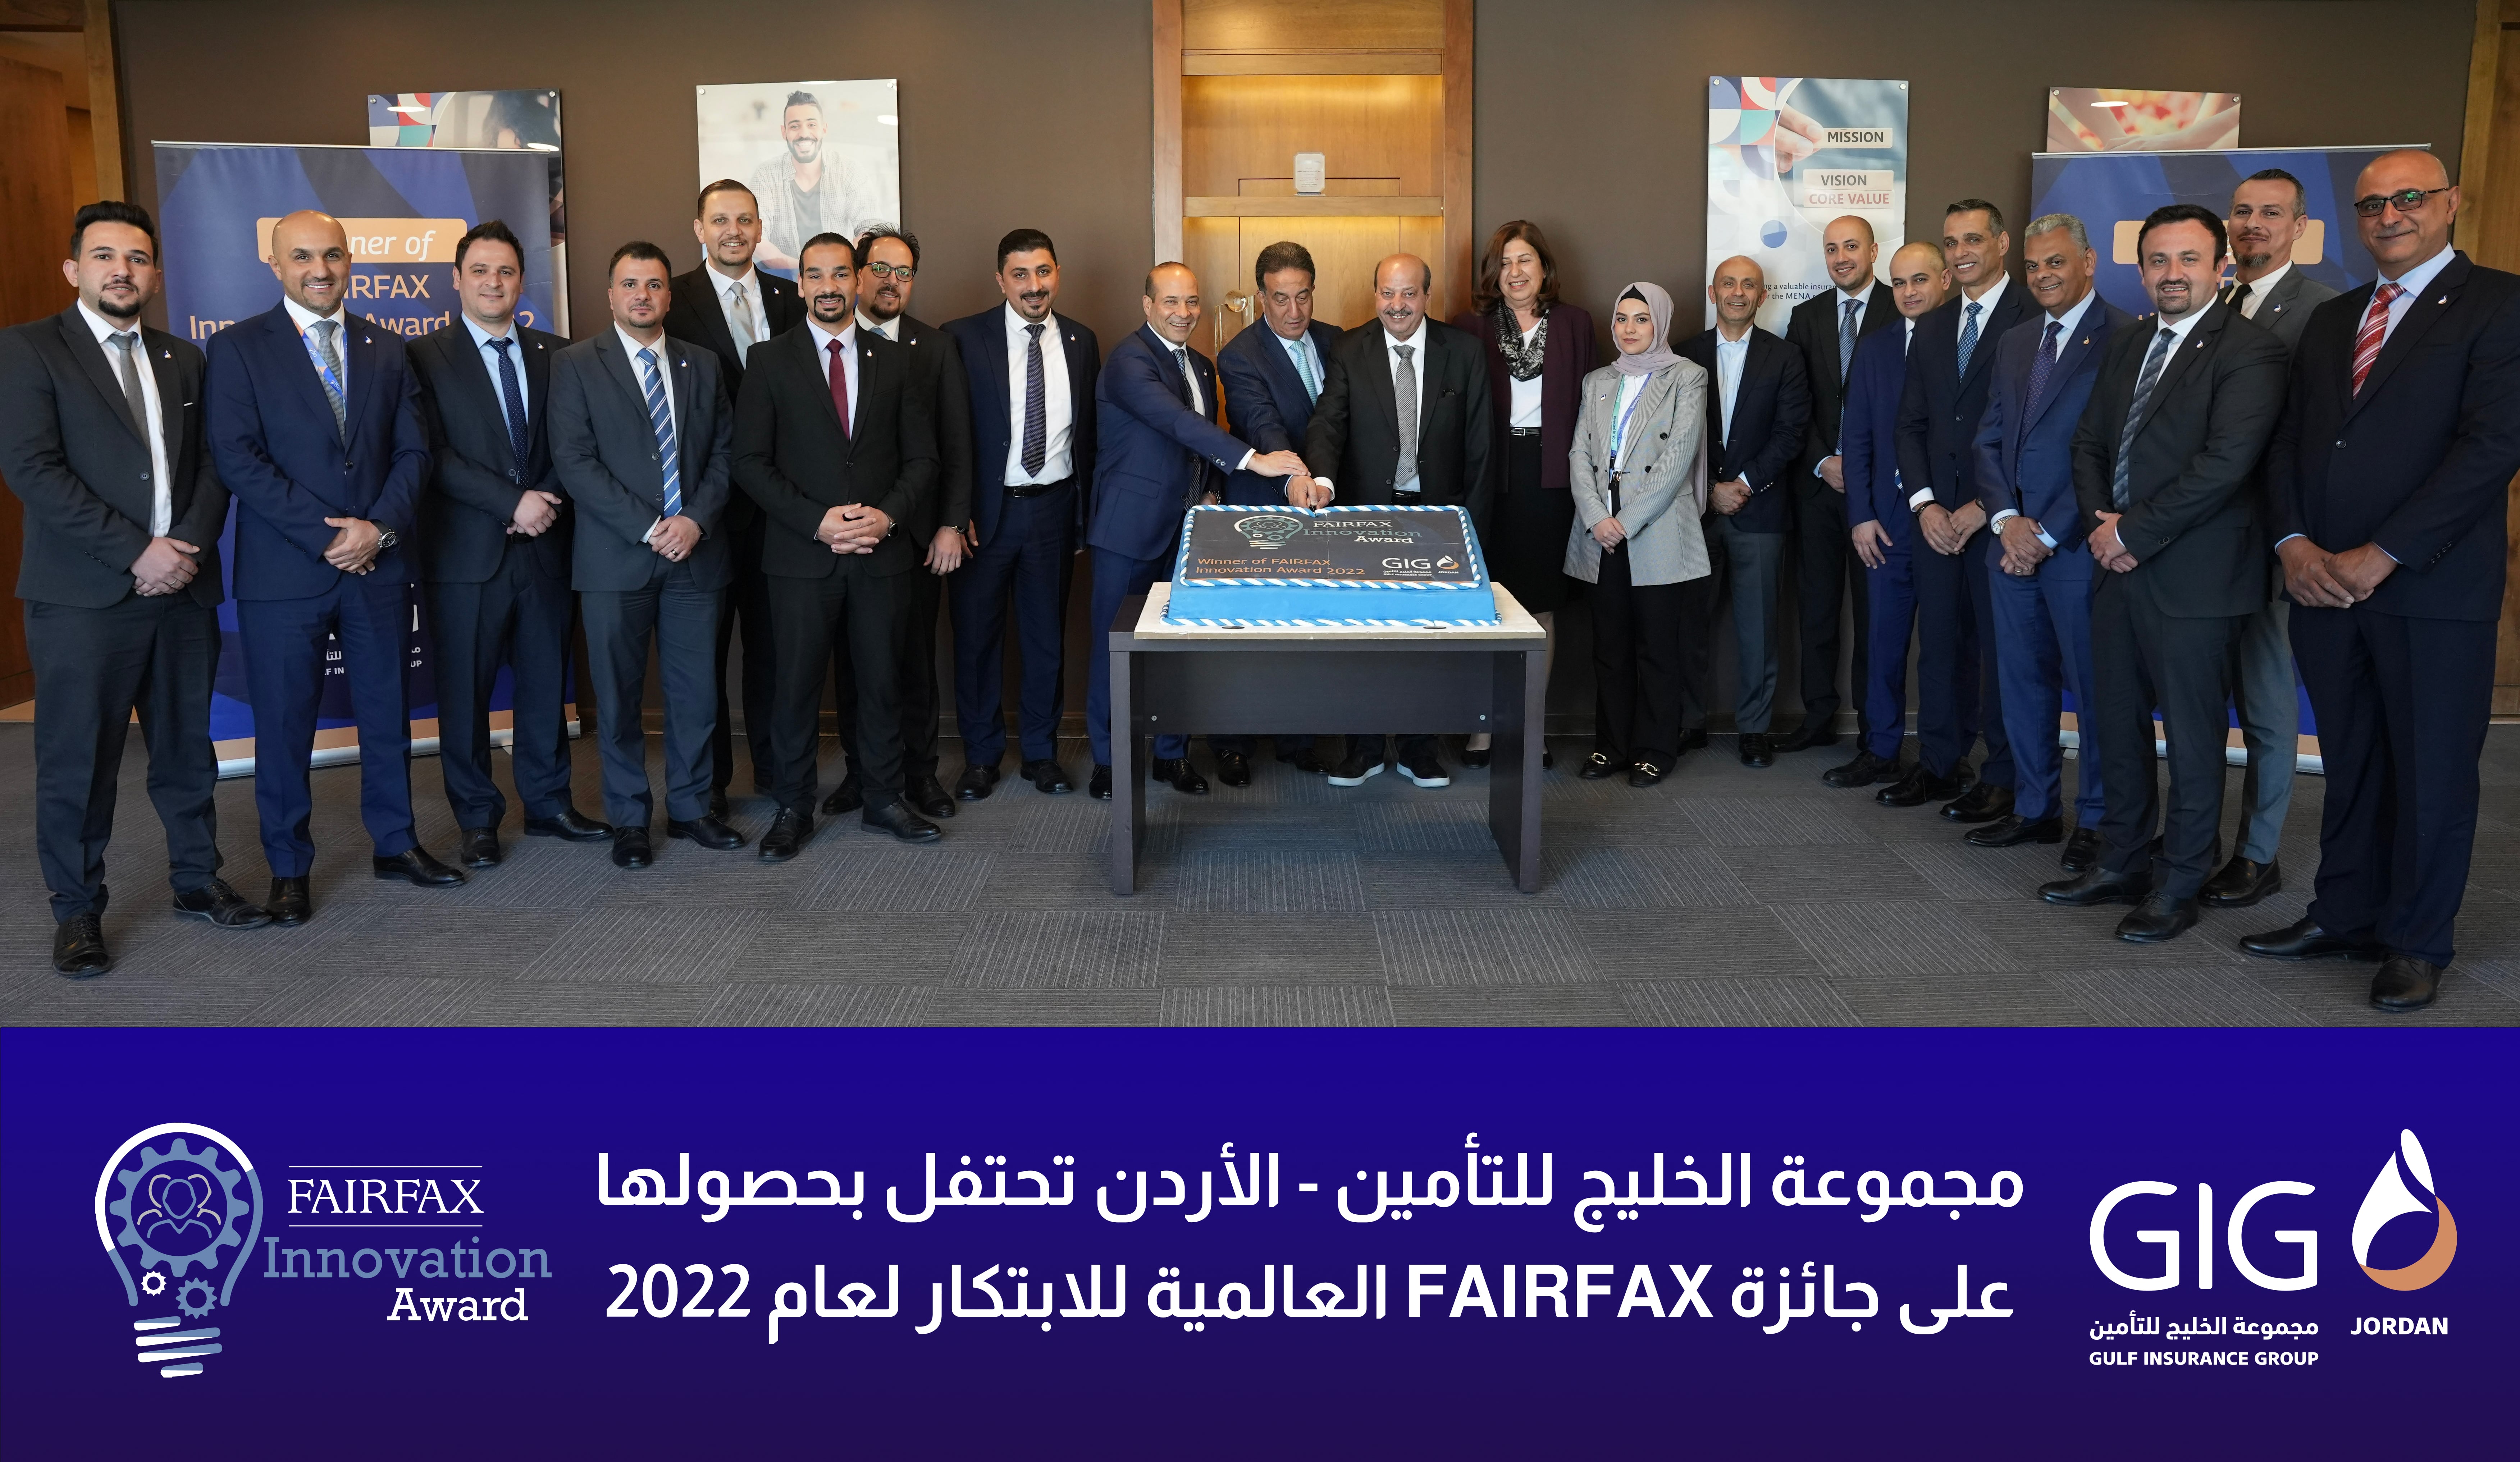 GIG - Jordan celebrates winning the 2022 Fairfax Global Innovation Award